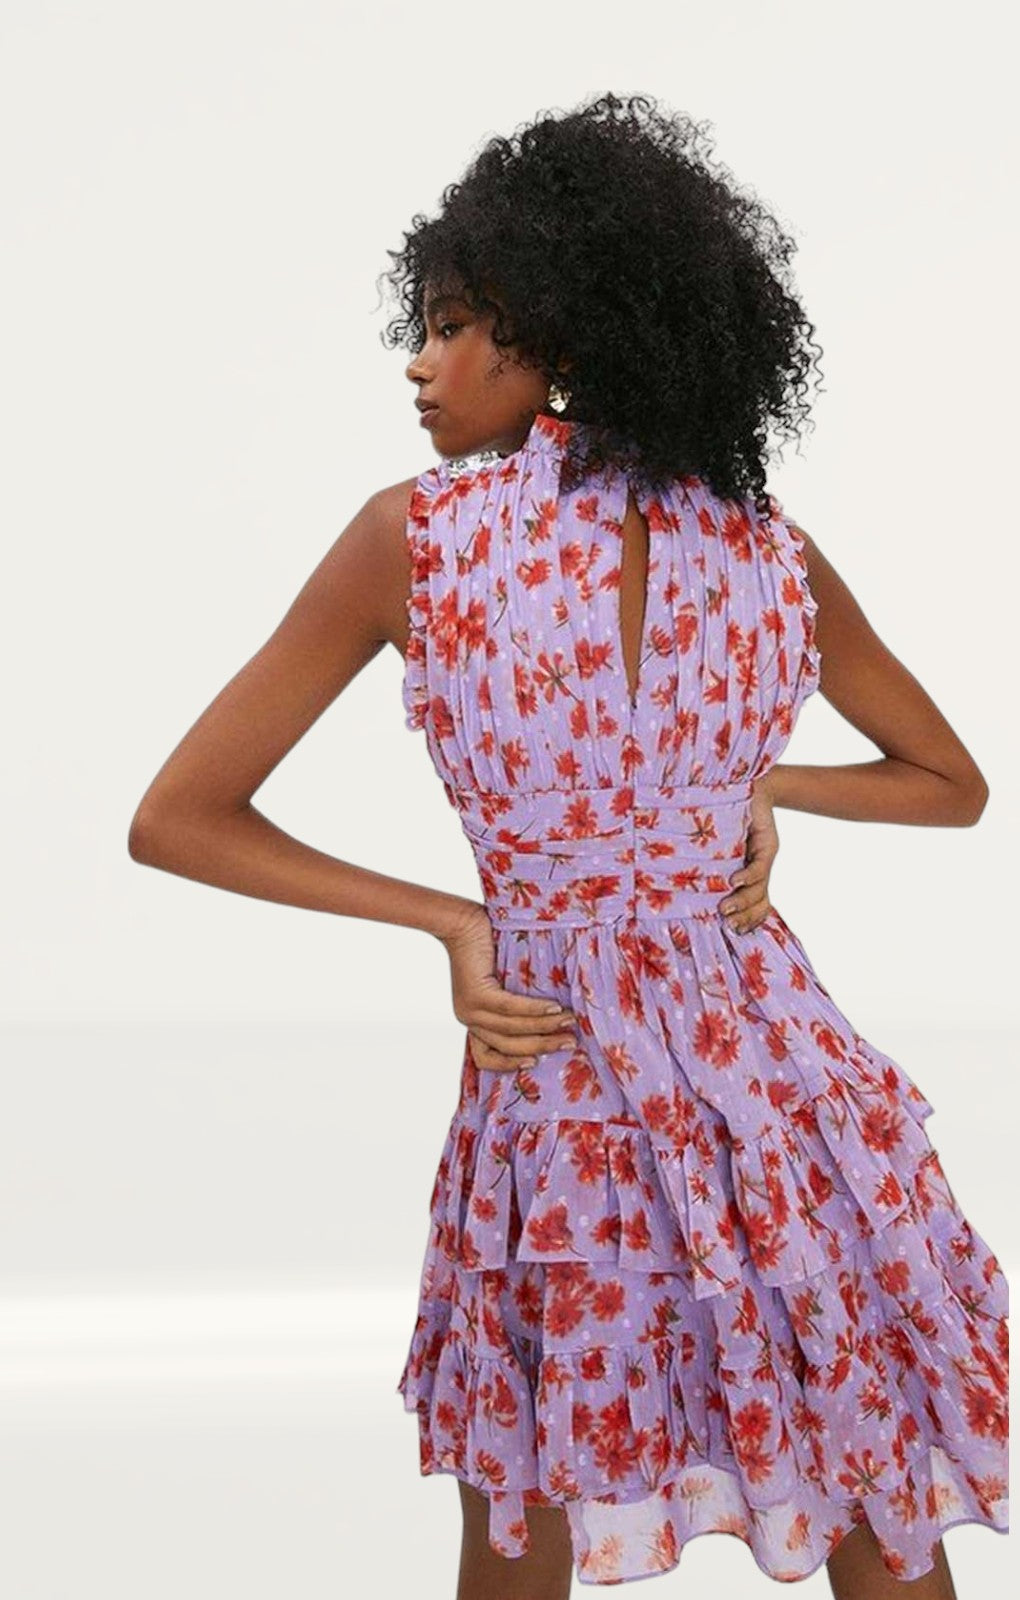 Coast Lilac Printed Tiered Frill Sleeve Mini Dress product image